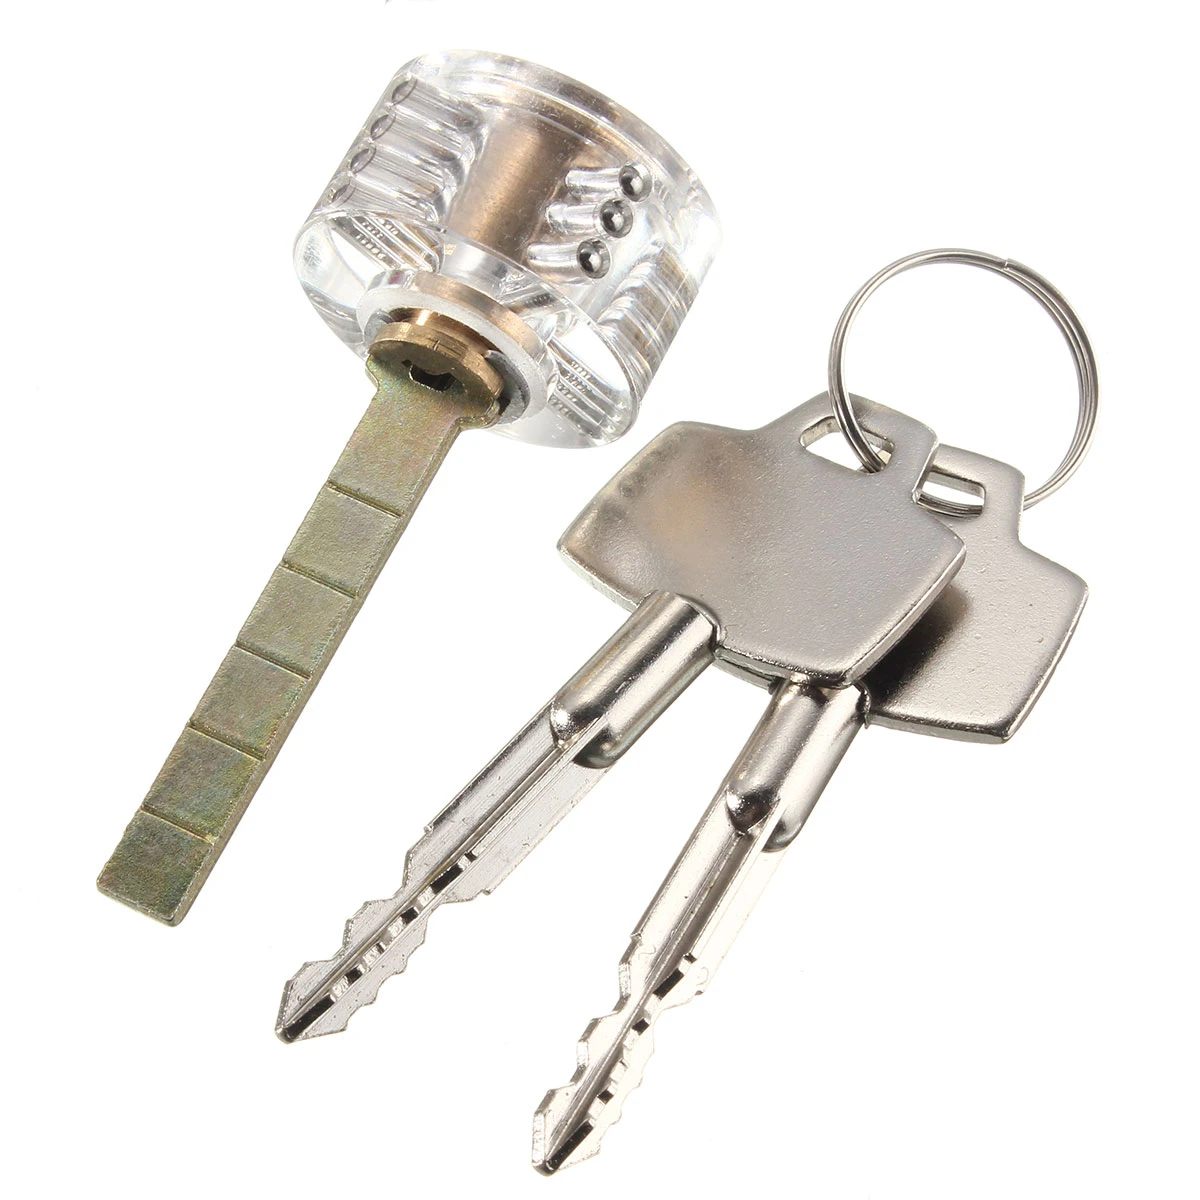 Pick Visable Padlock Transparent Cross Lock for Locksmith Practice Training Skill Lock Picks Tools